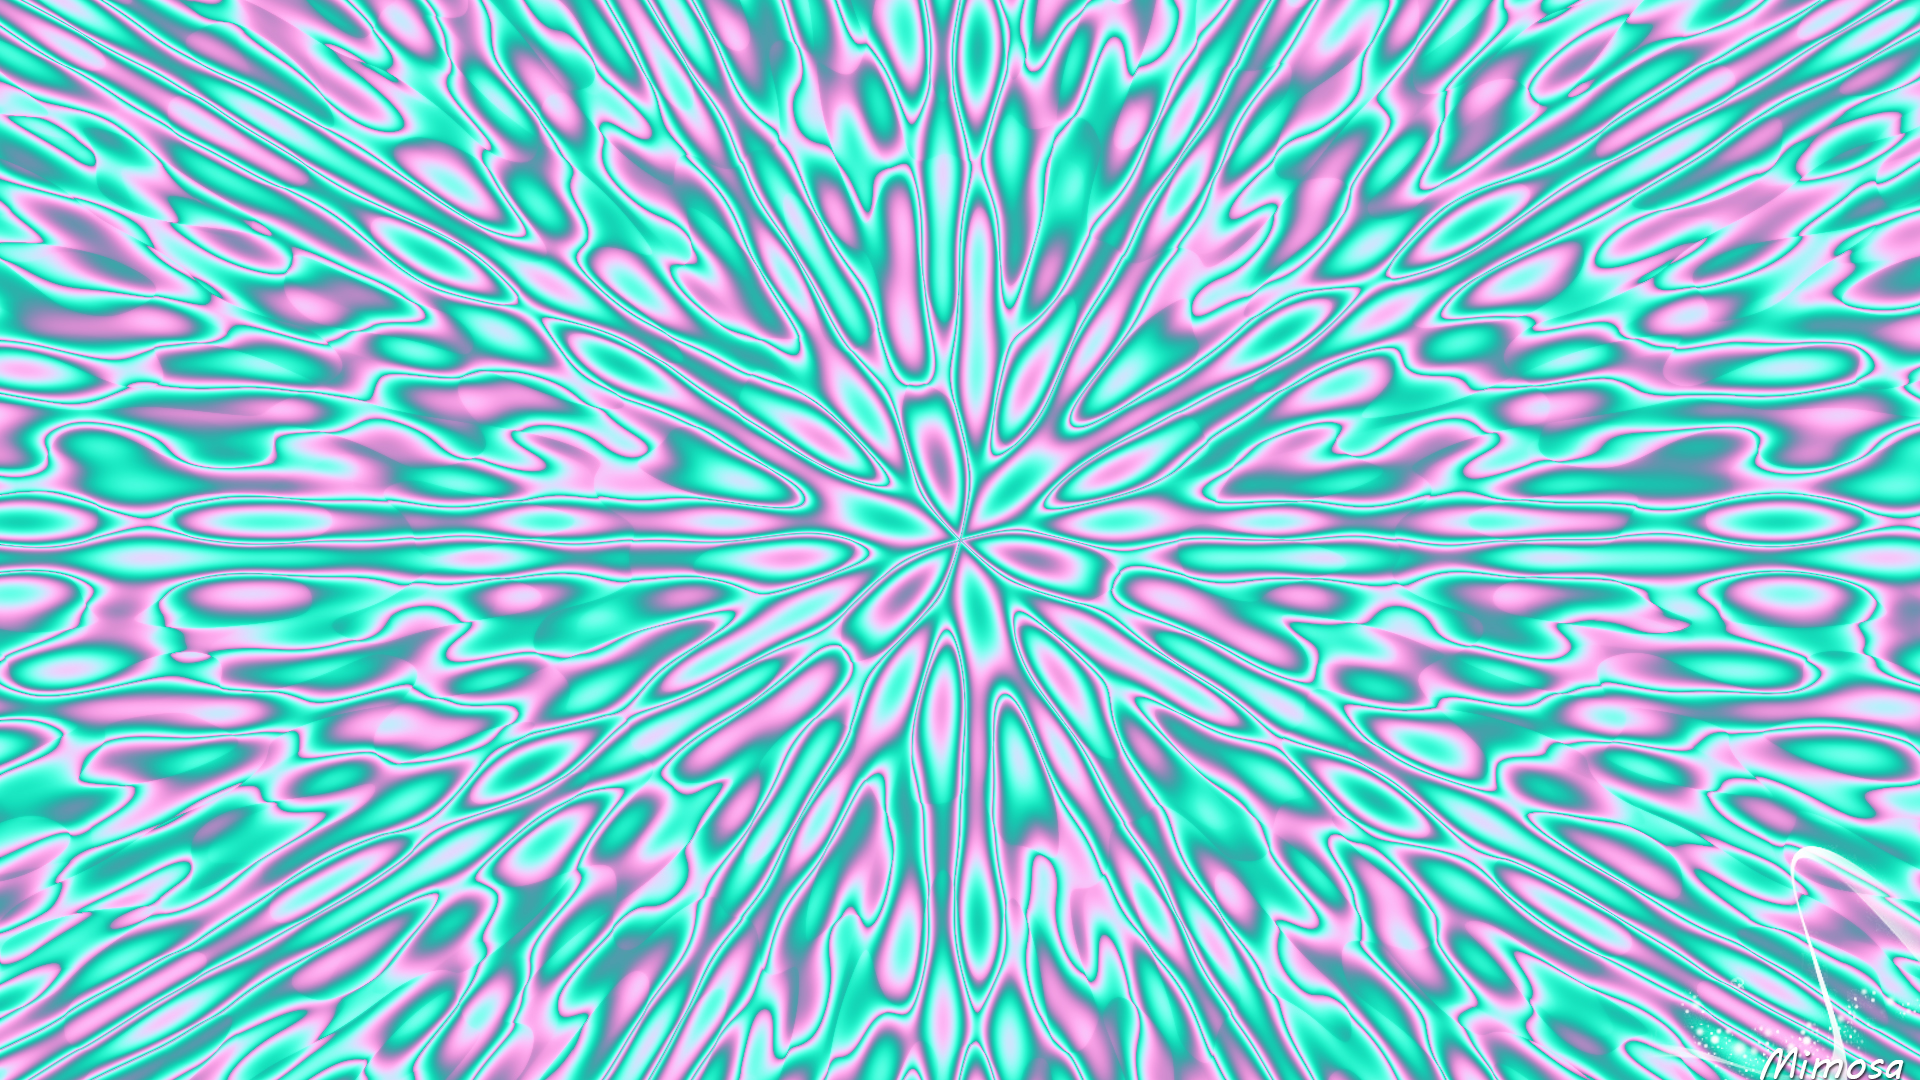 Abstract Artistic Colors Digital Art Kaleidoscope 1920x1080